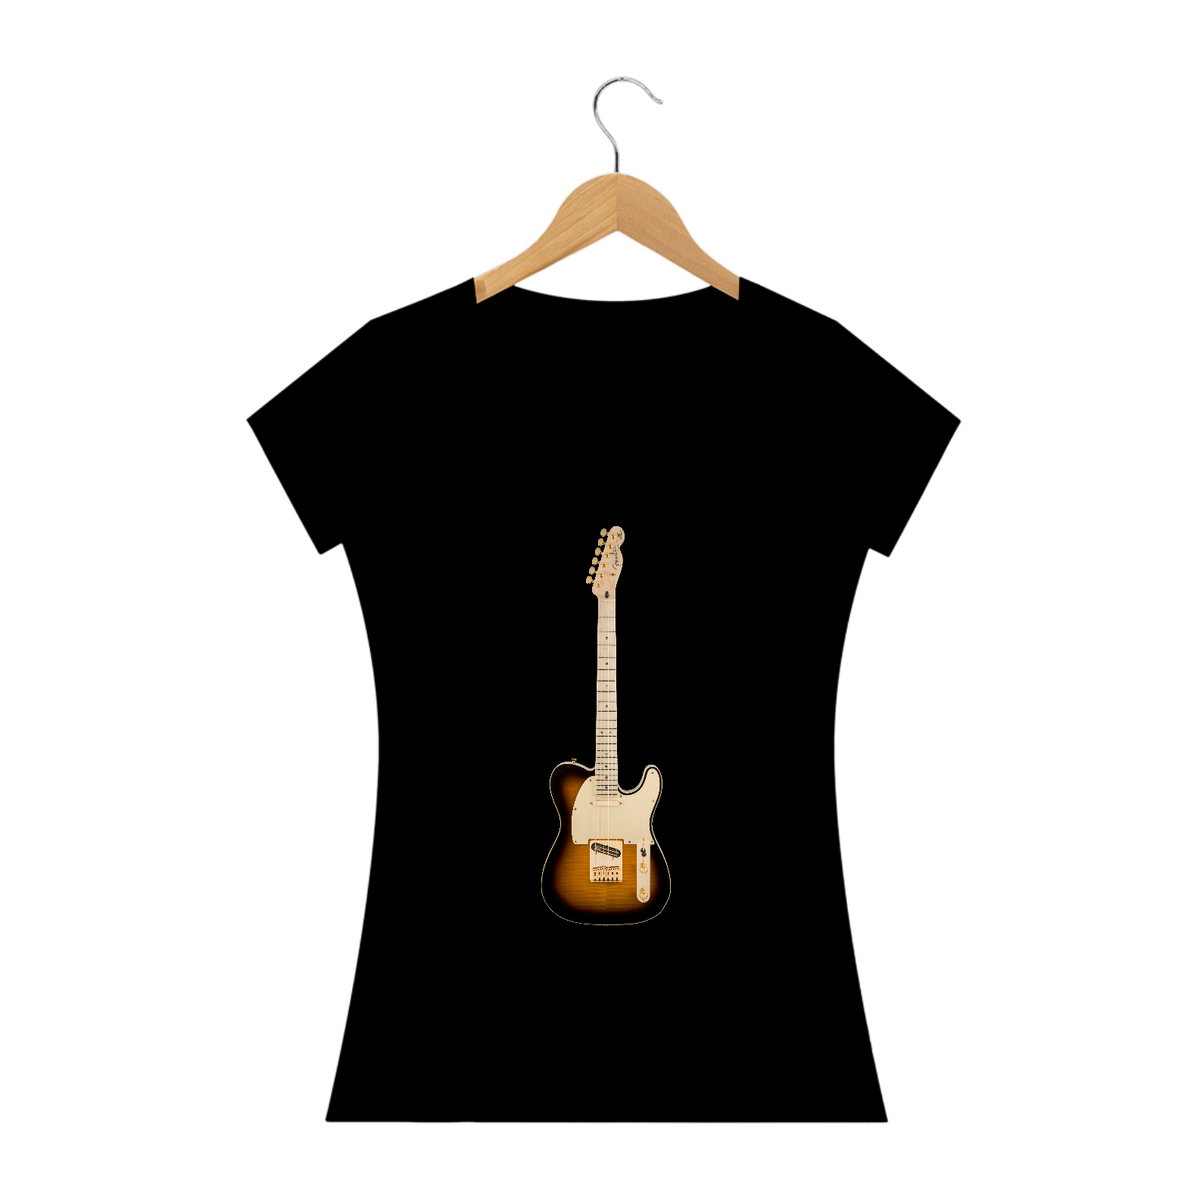 Nome do produto: Baby Long Prime - Guitarra Fender Telecaster Richie Kotzen Siganture Tobacco Burst - Model 1